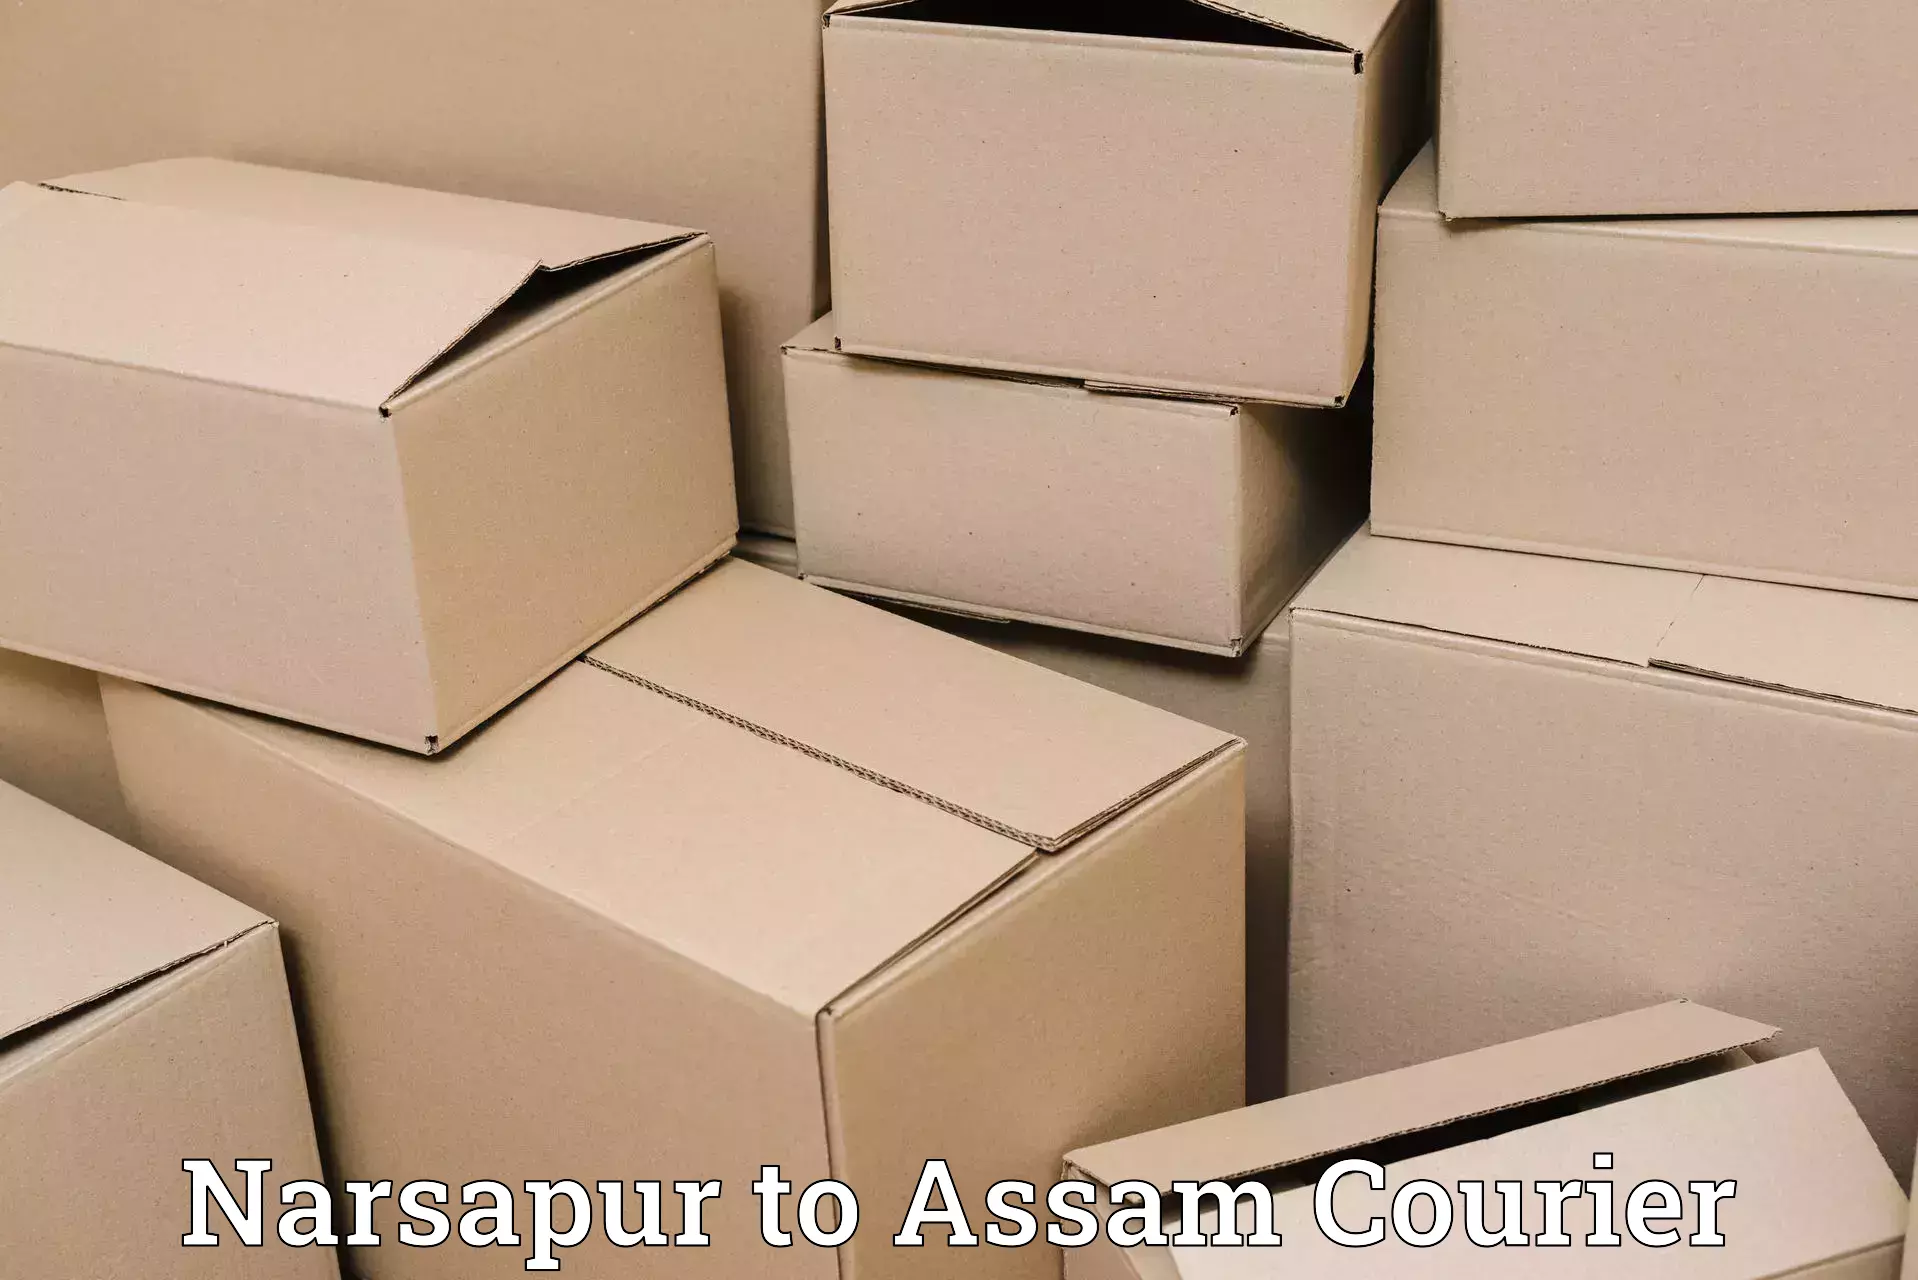 Courier service comparison Narsapur to Assam